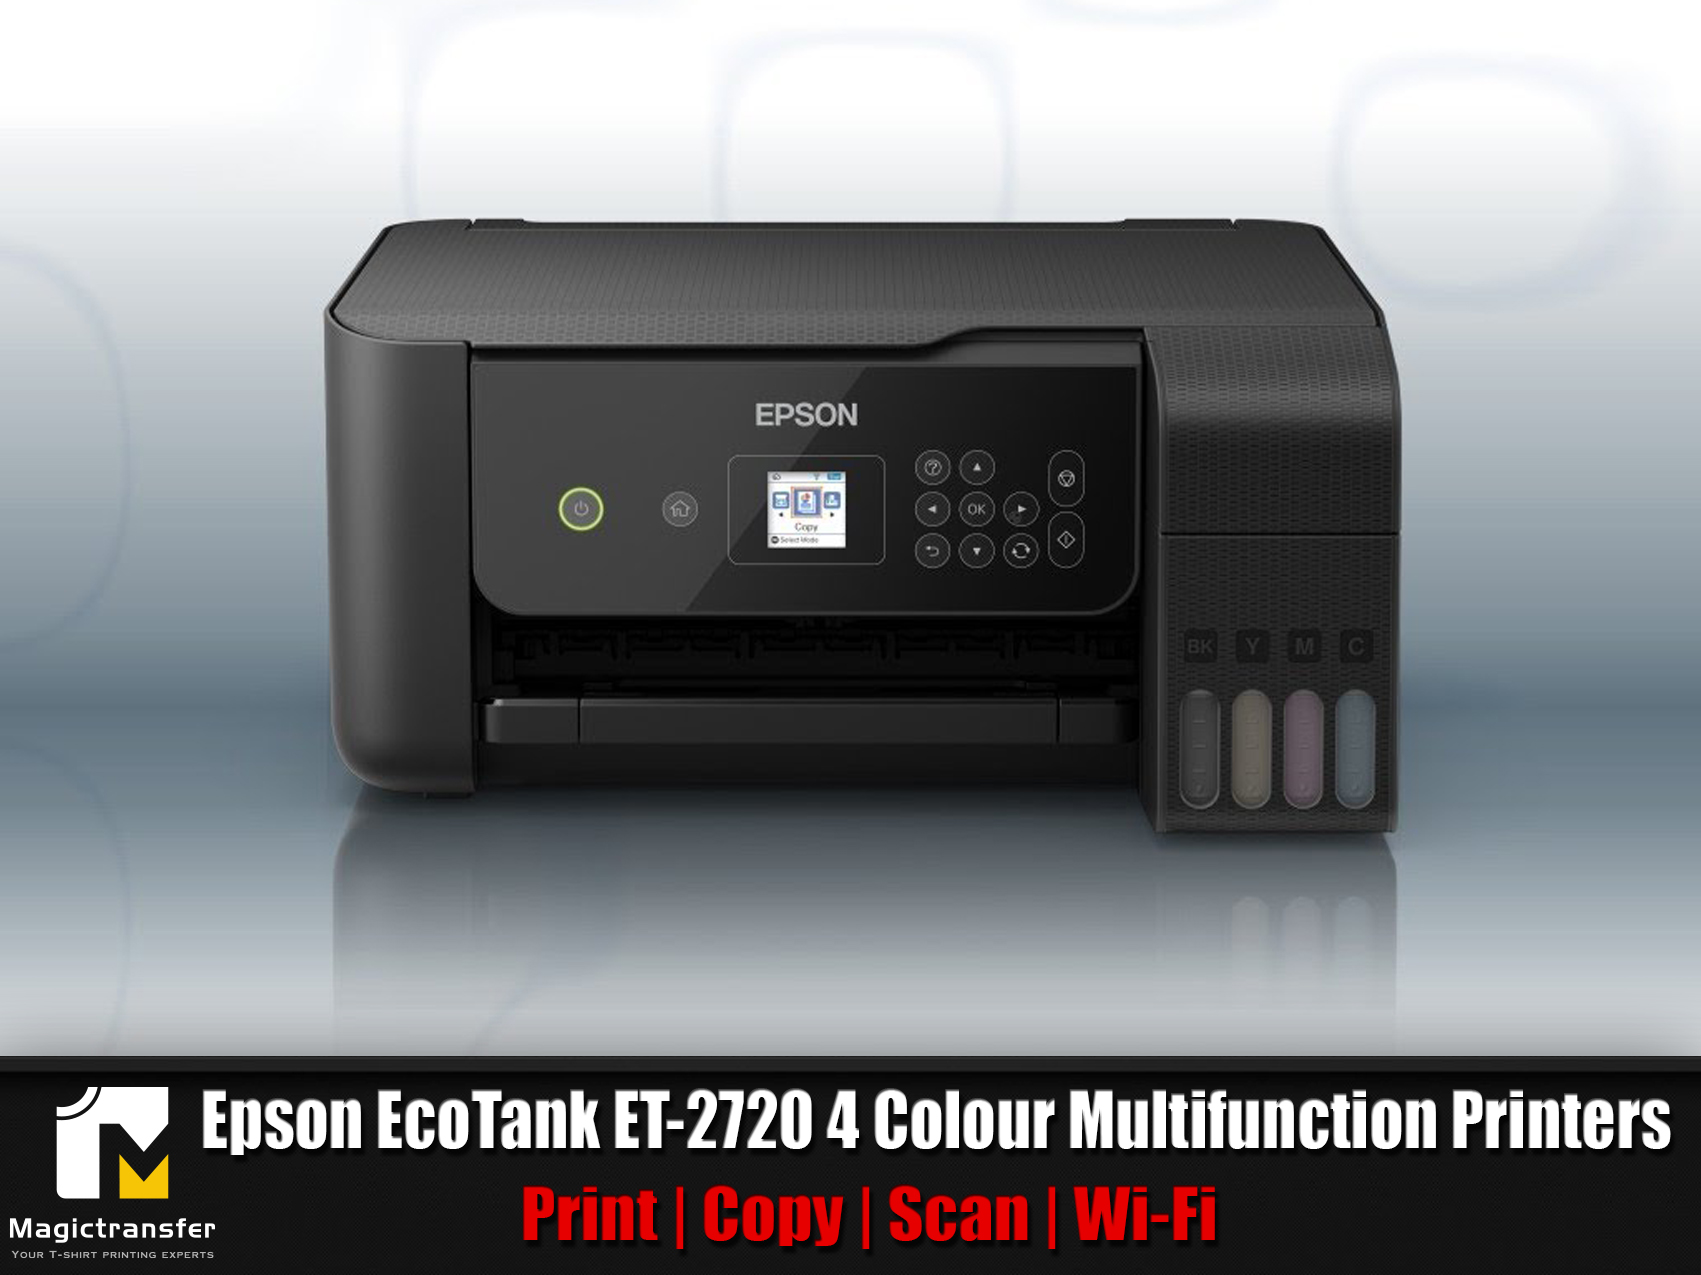 Multifunction printer EPSON EcoTank ET-2820 ink-printer without